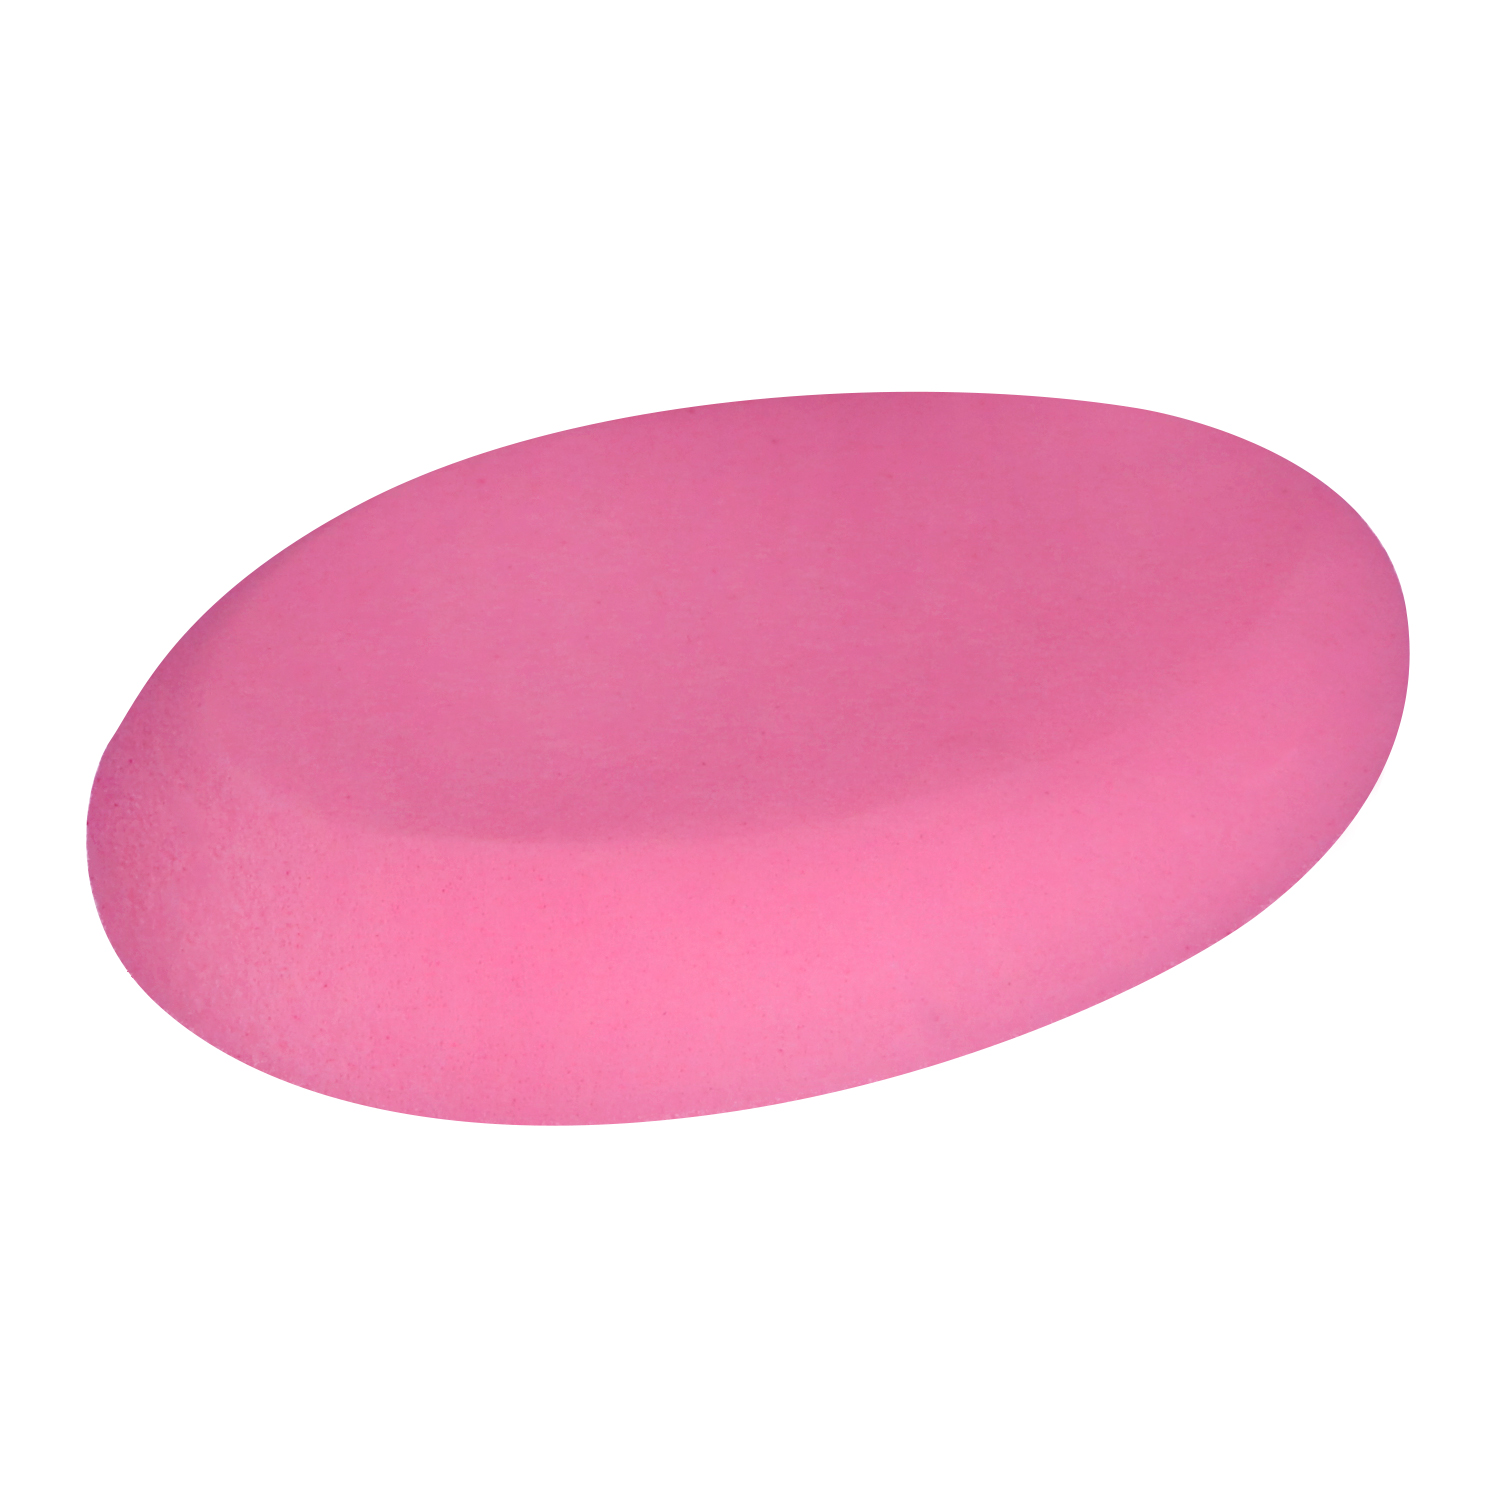 Oval Buffed Sponge Blending Spons - Dark Pink